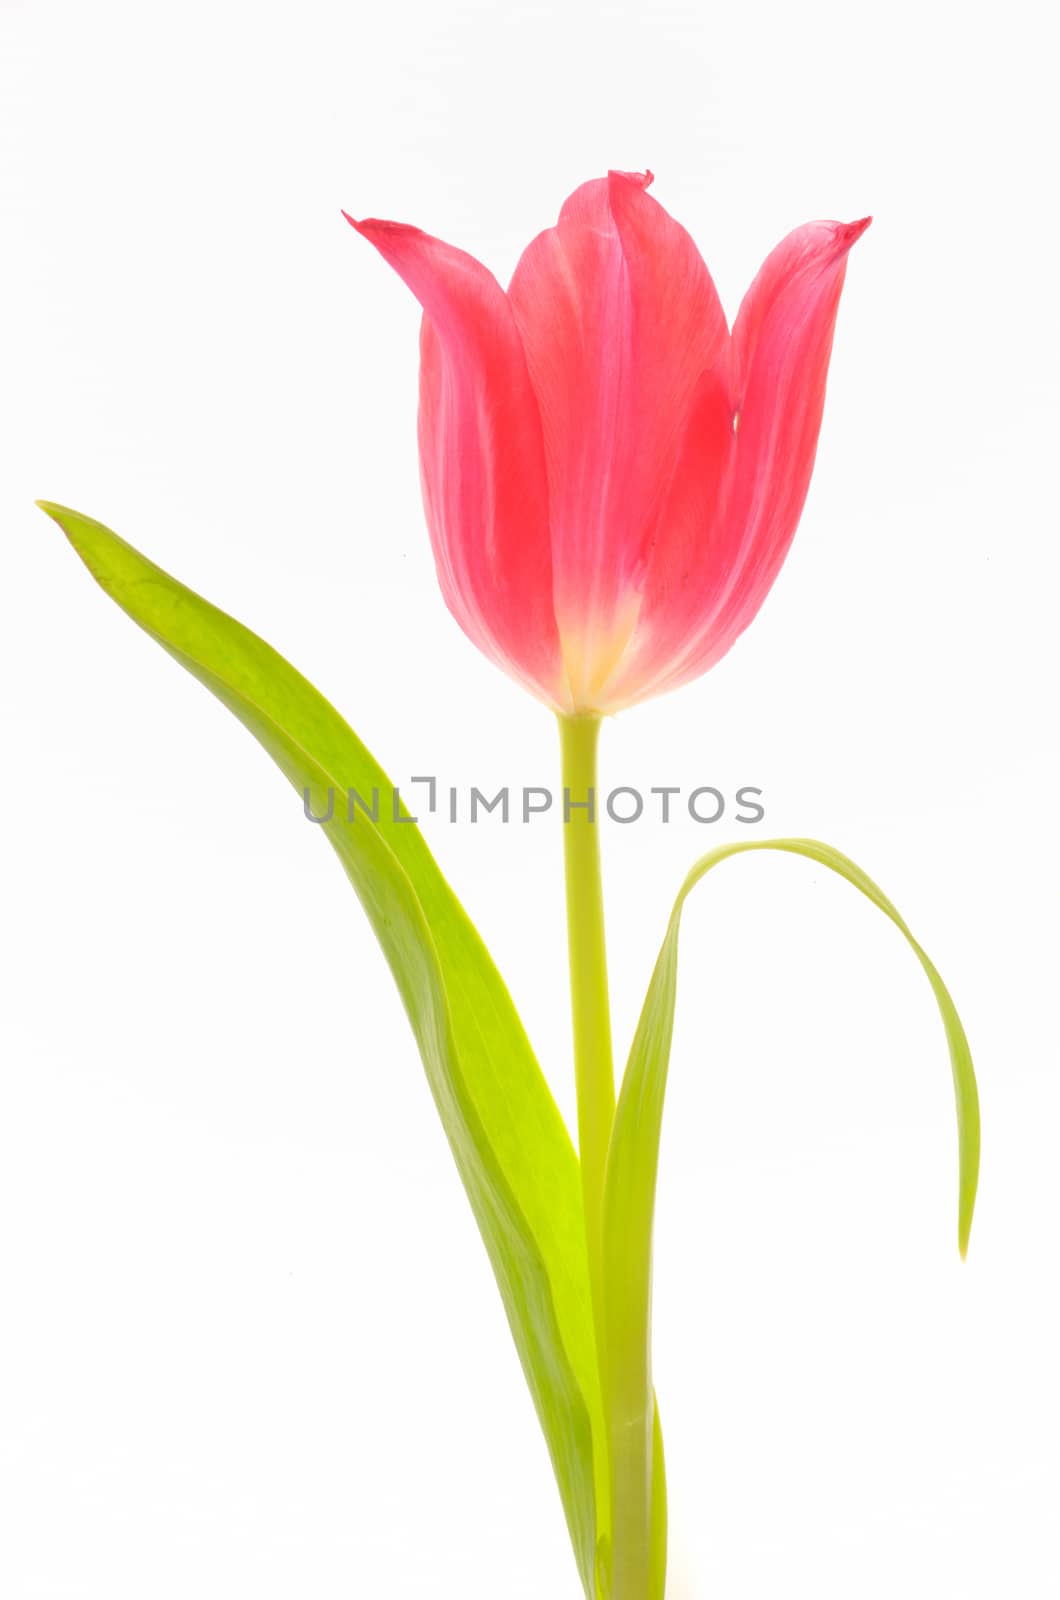 red tulip by jordachelr